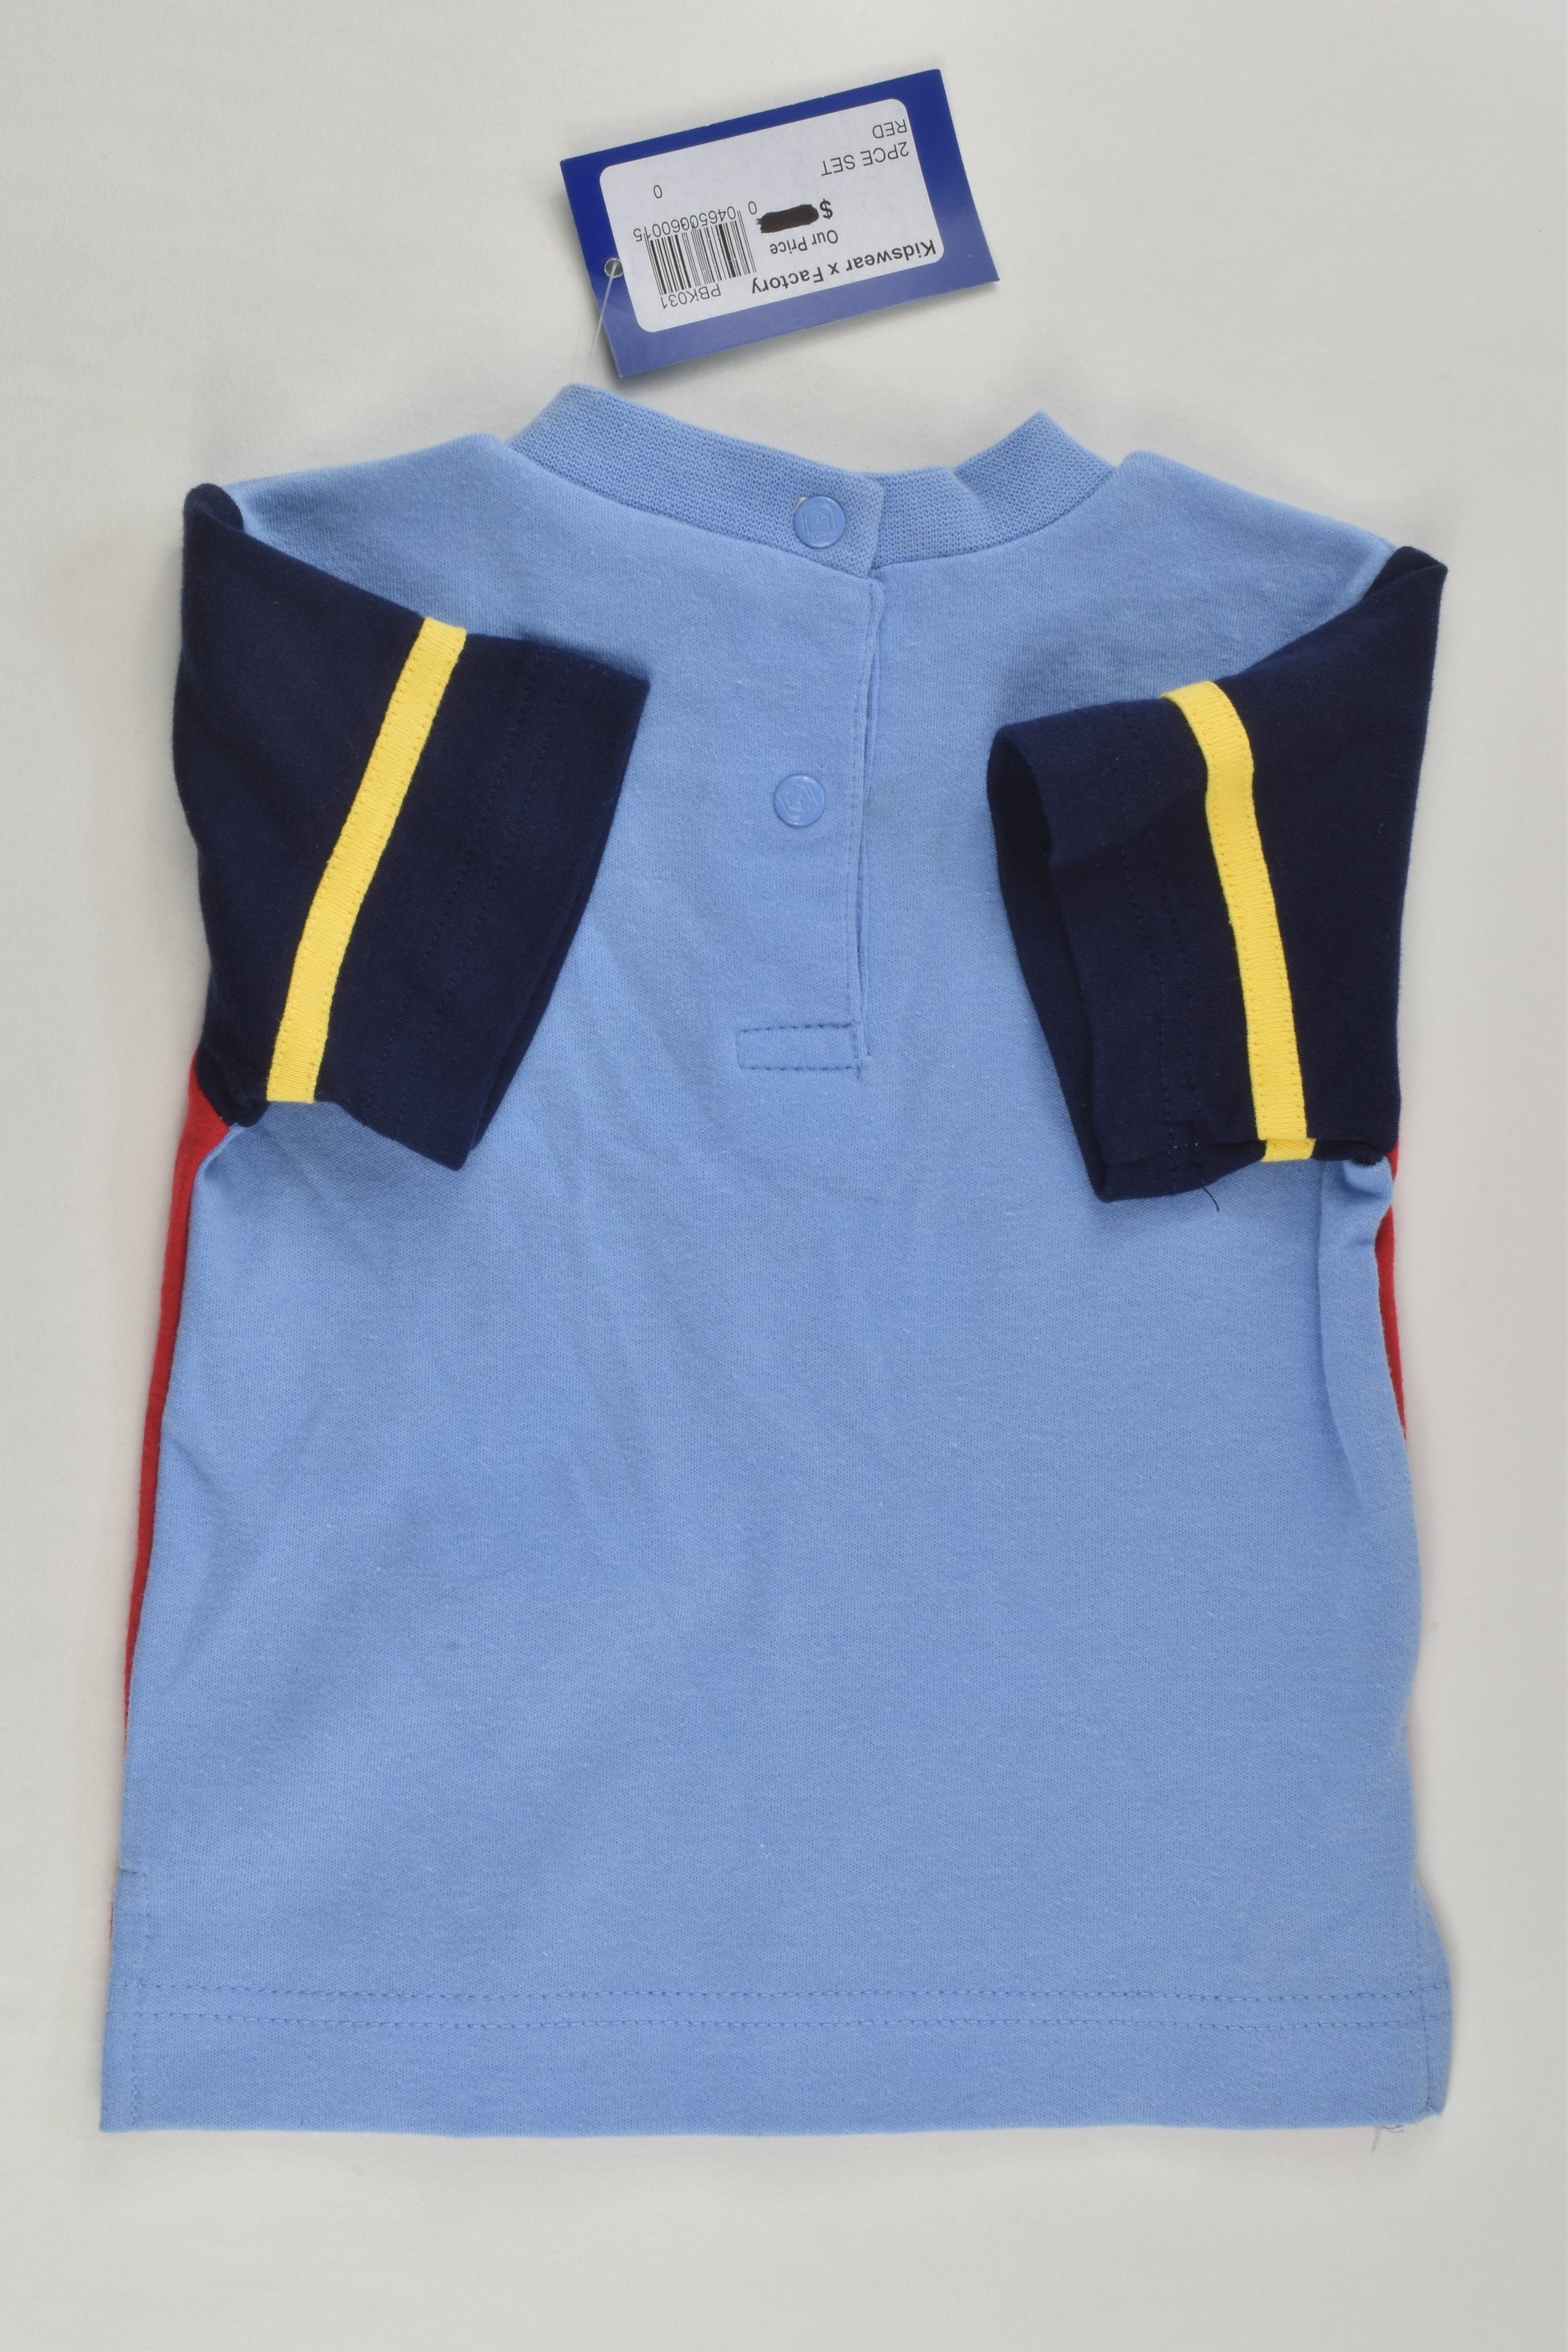 NEW Kidswear X Factory Size 0 (12 months) Vintage Paddington Bear T-shirt